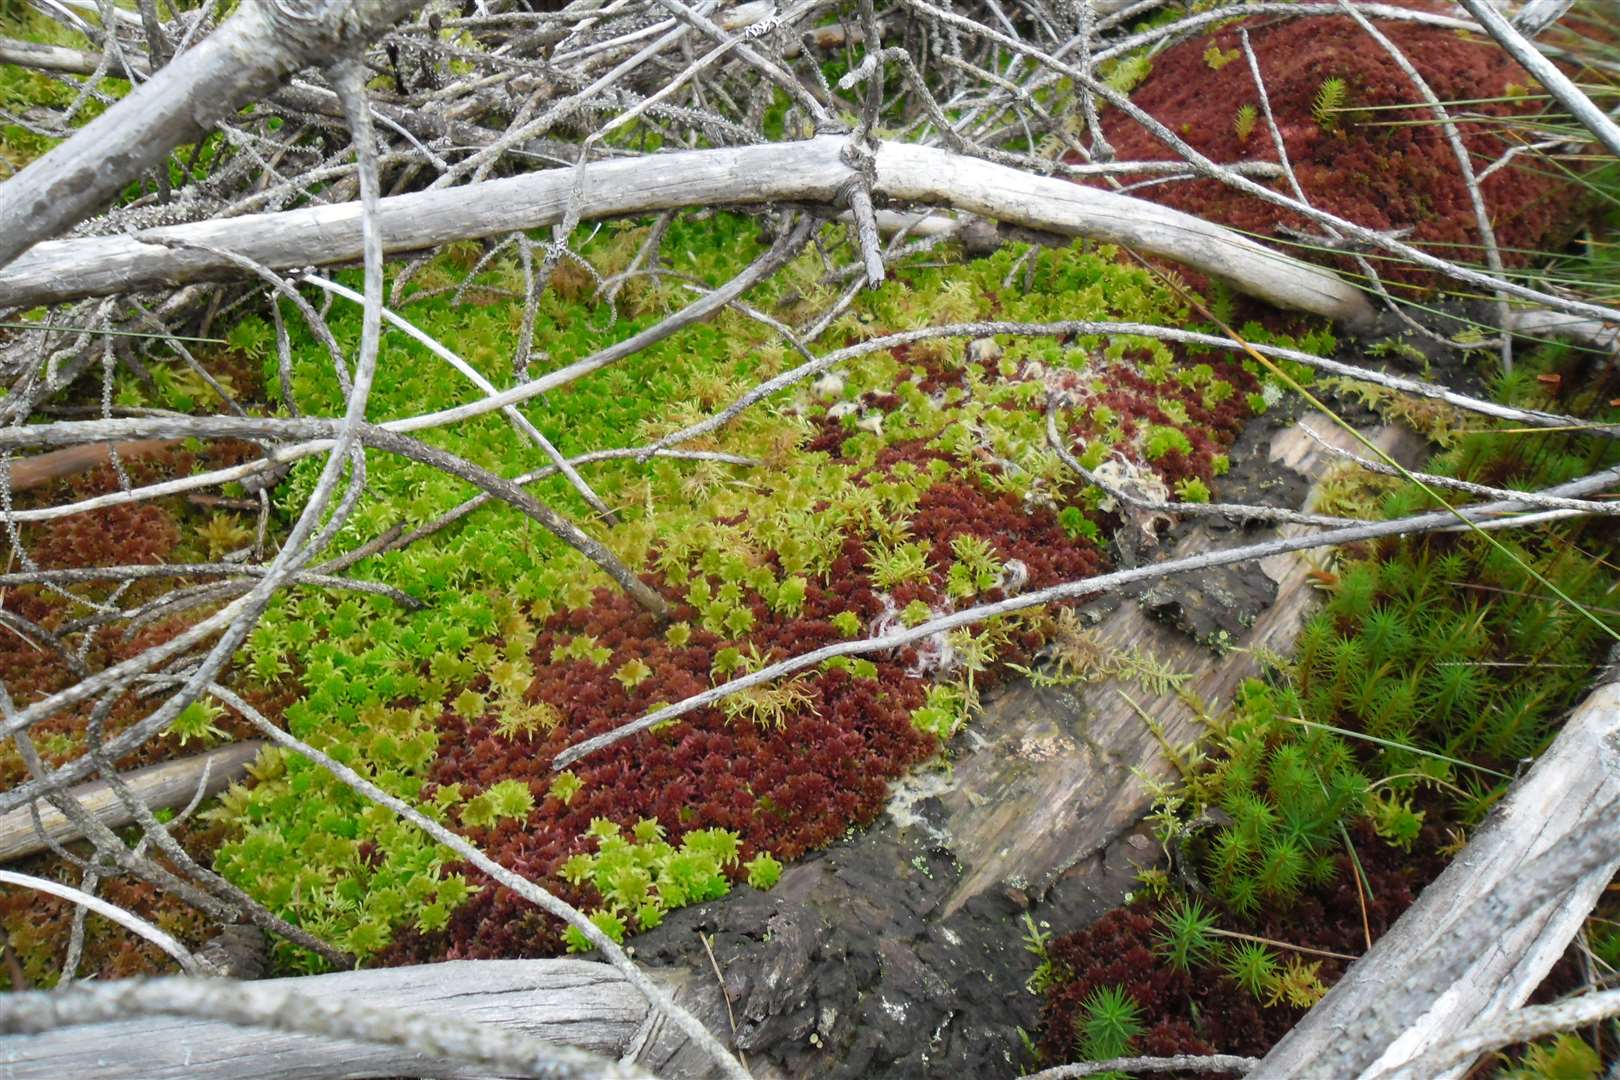 Sphagnum moss covering brash in a forest to bog restoration area.